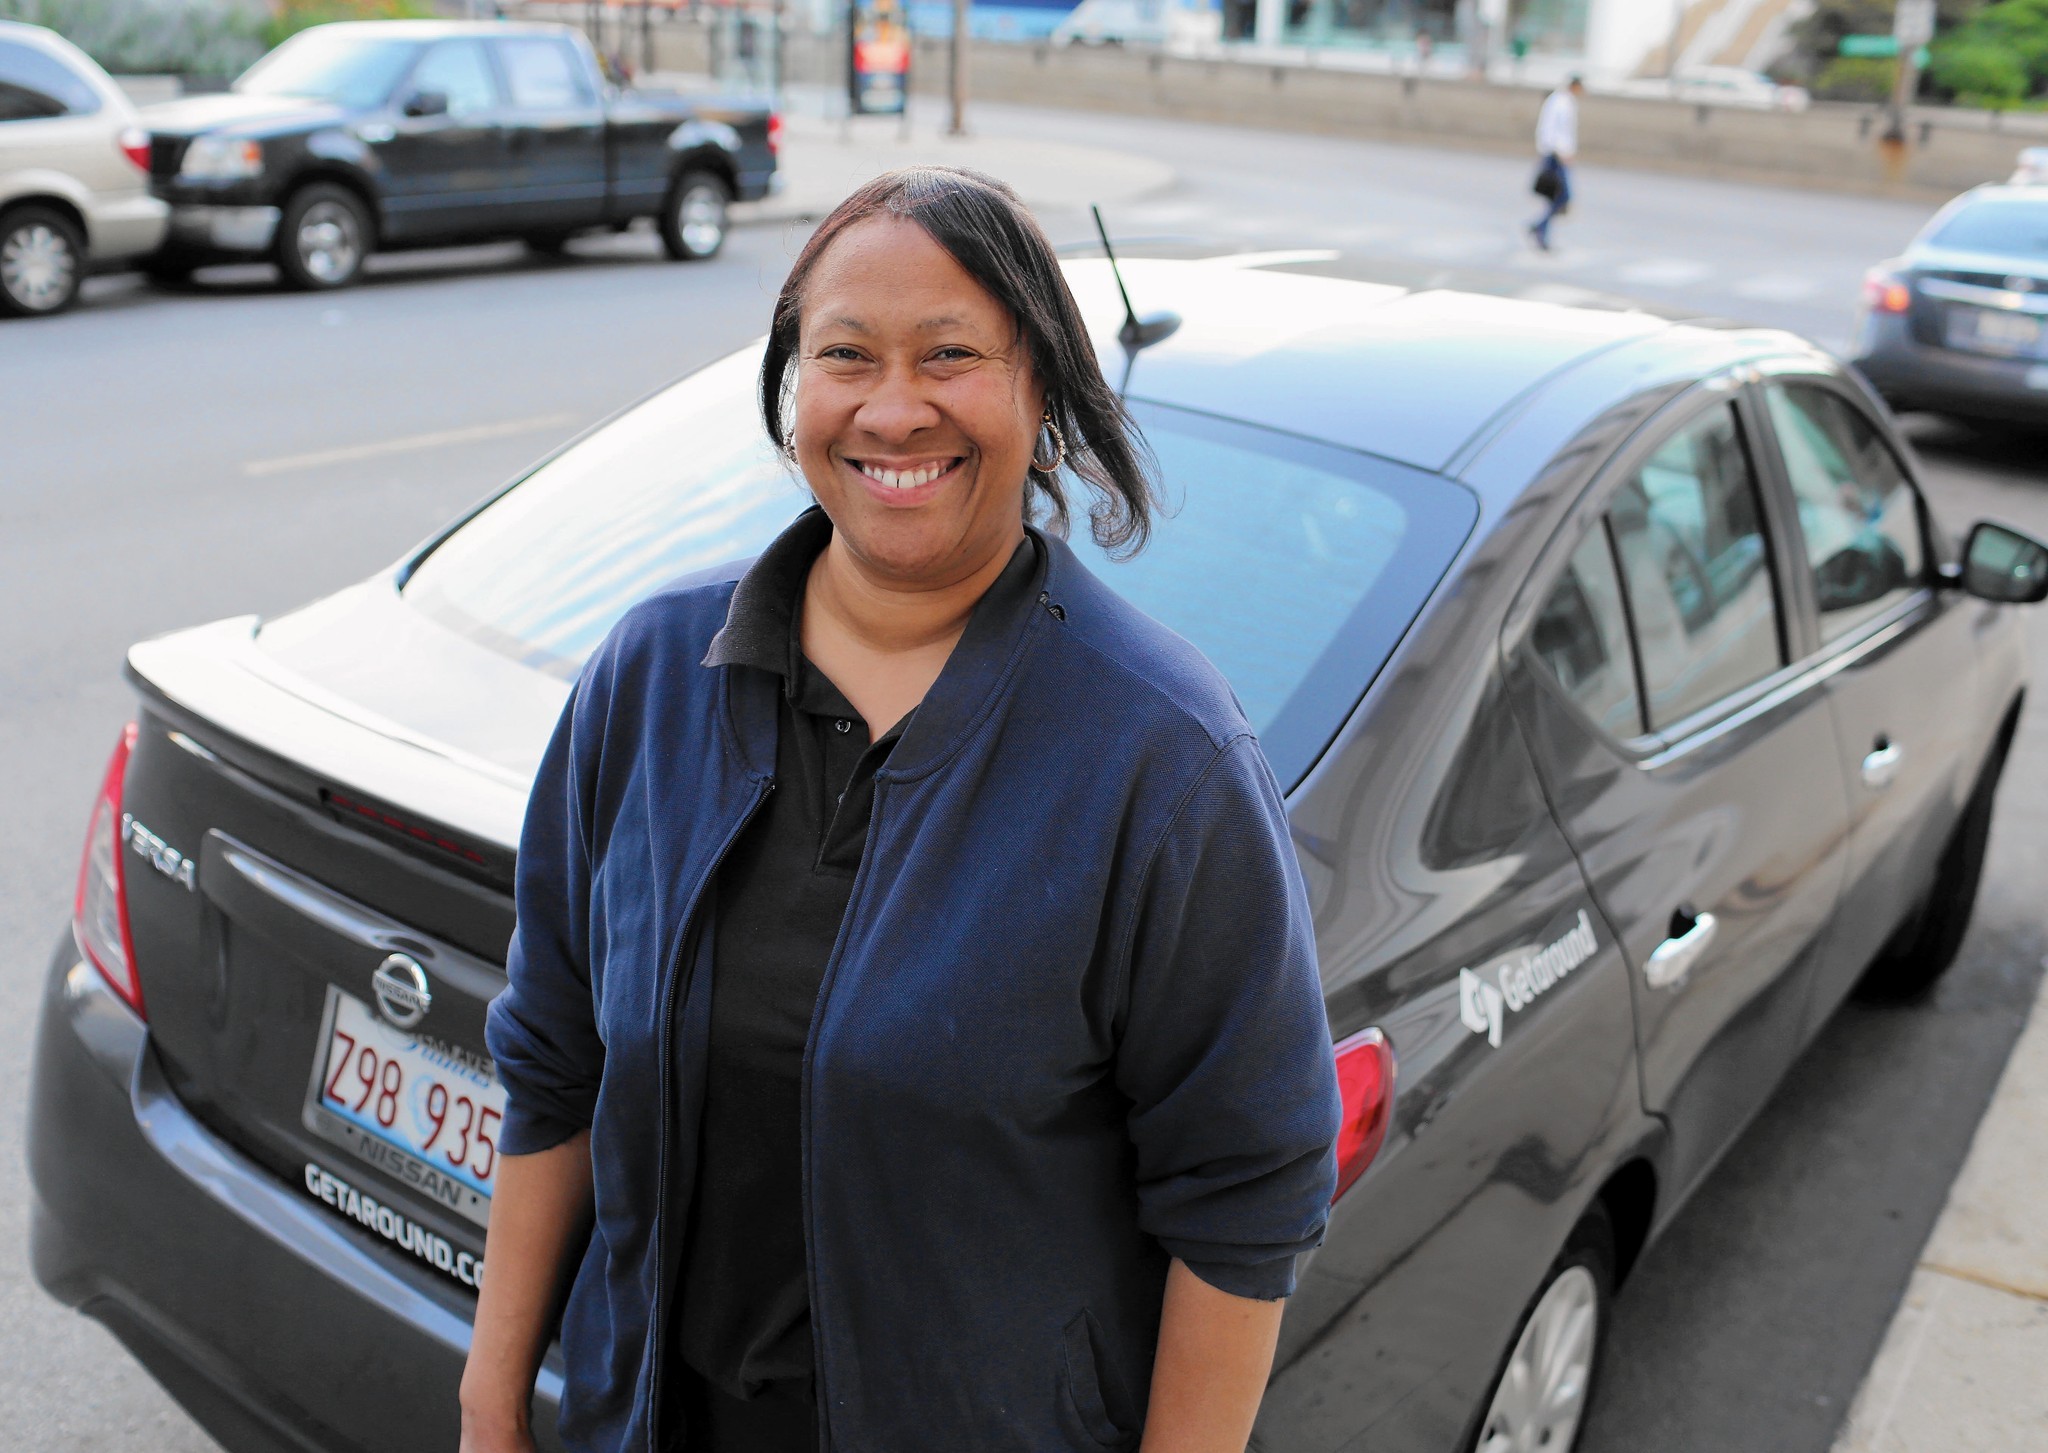 Peer-to-peer car sharing growing fast in Chicago - Chicago Tribune